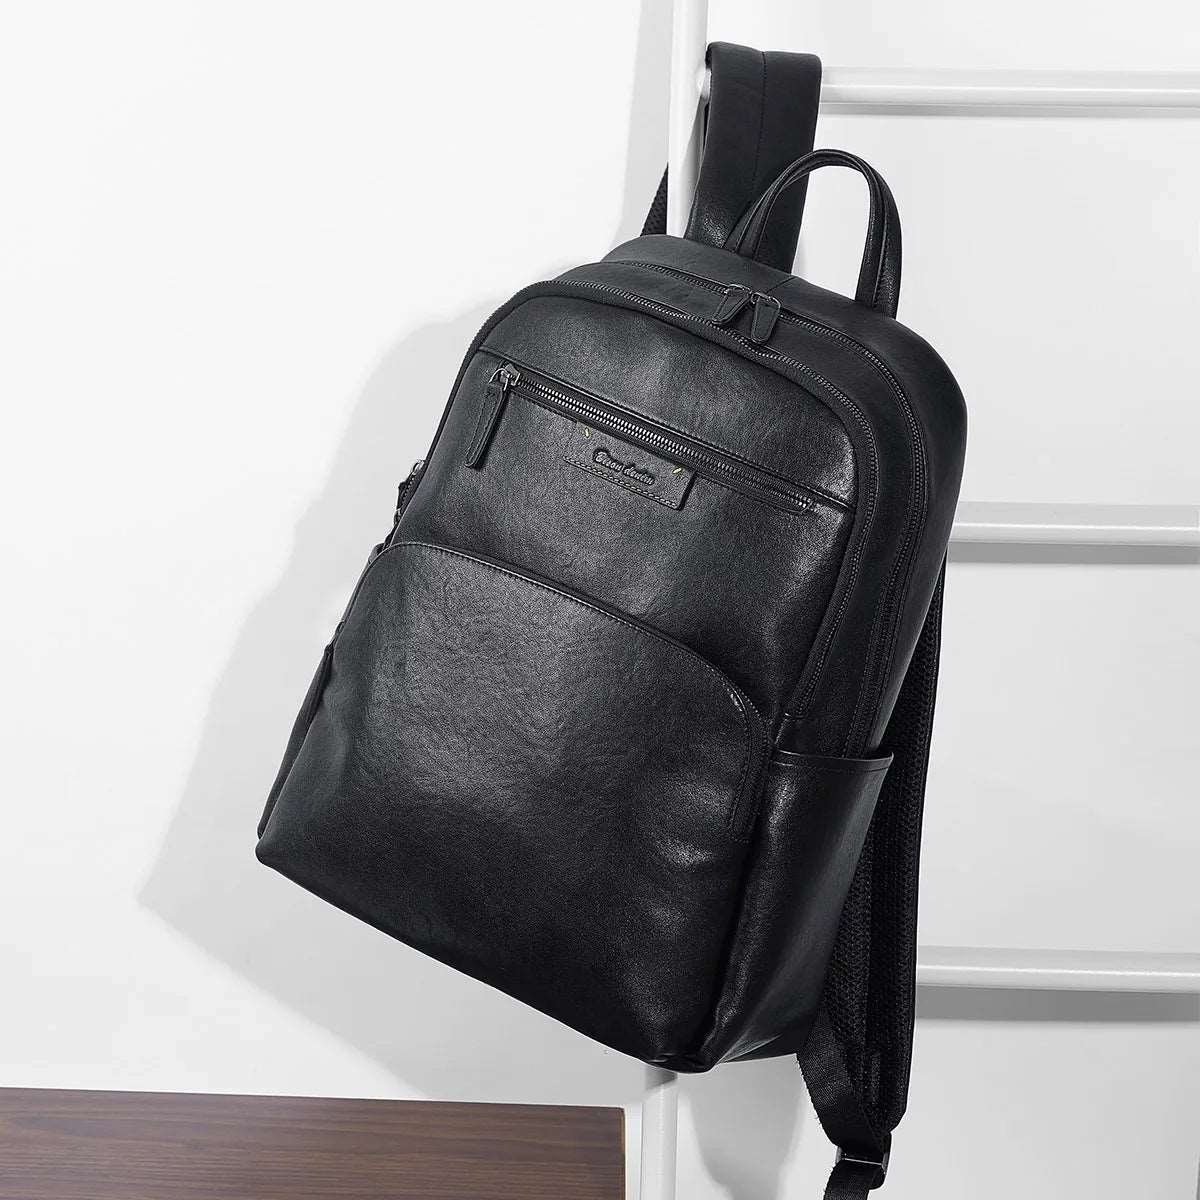 Backpack Genuine Leather Fashion Schoolbag Travel Bag